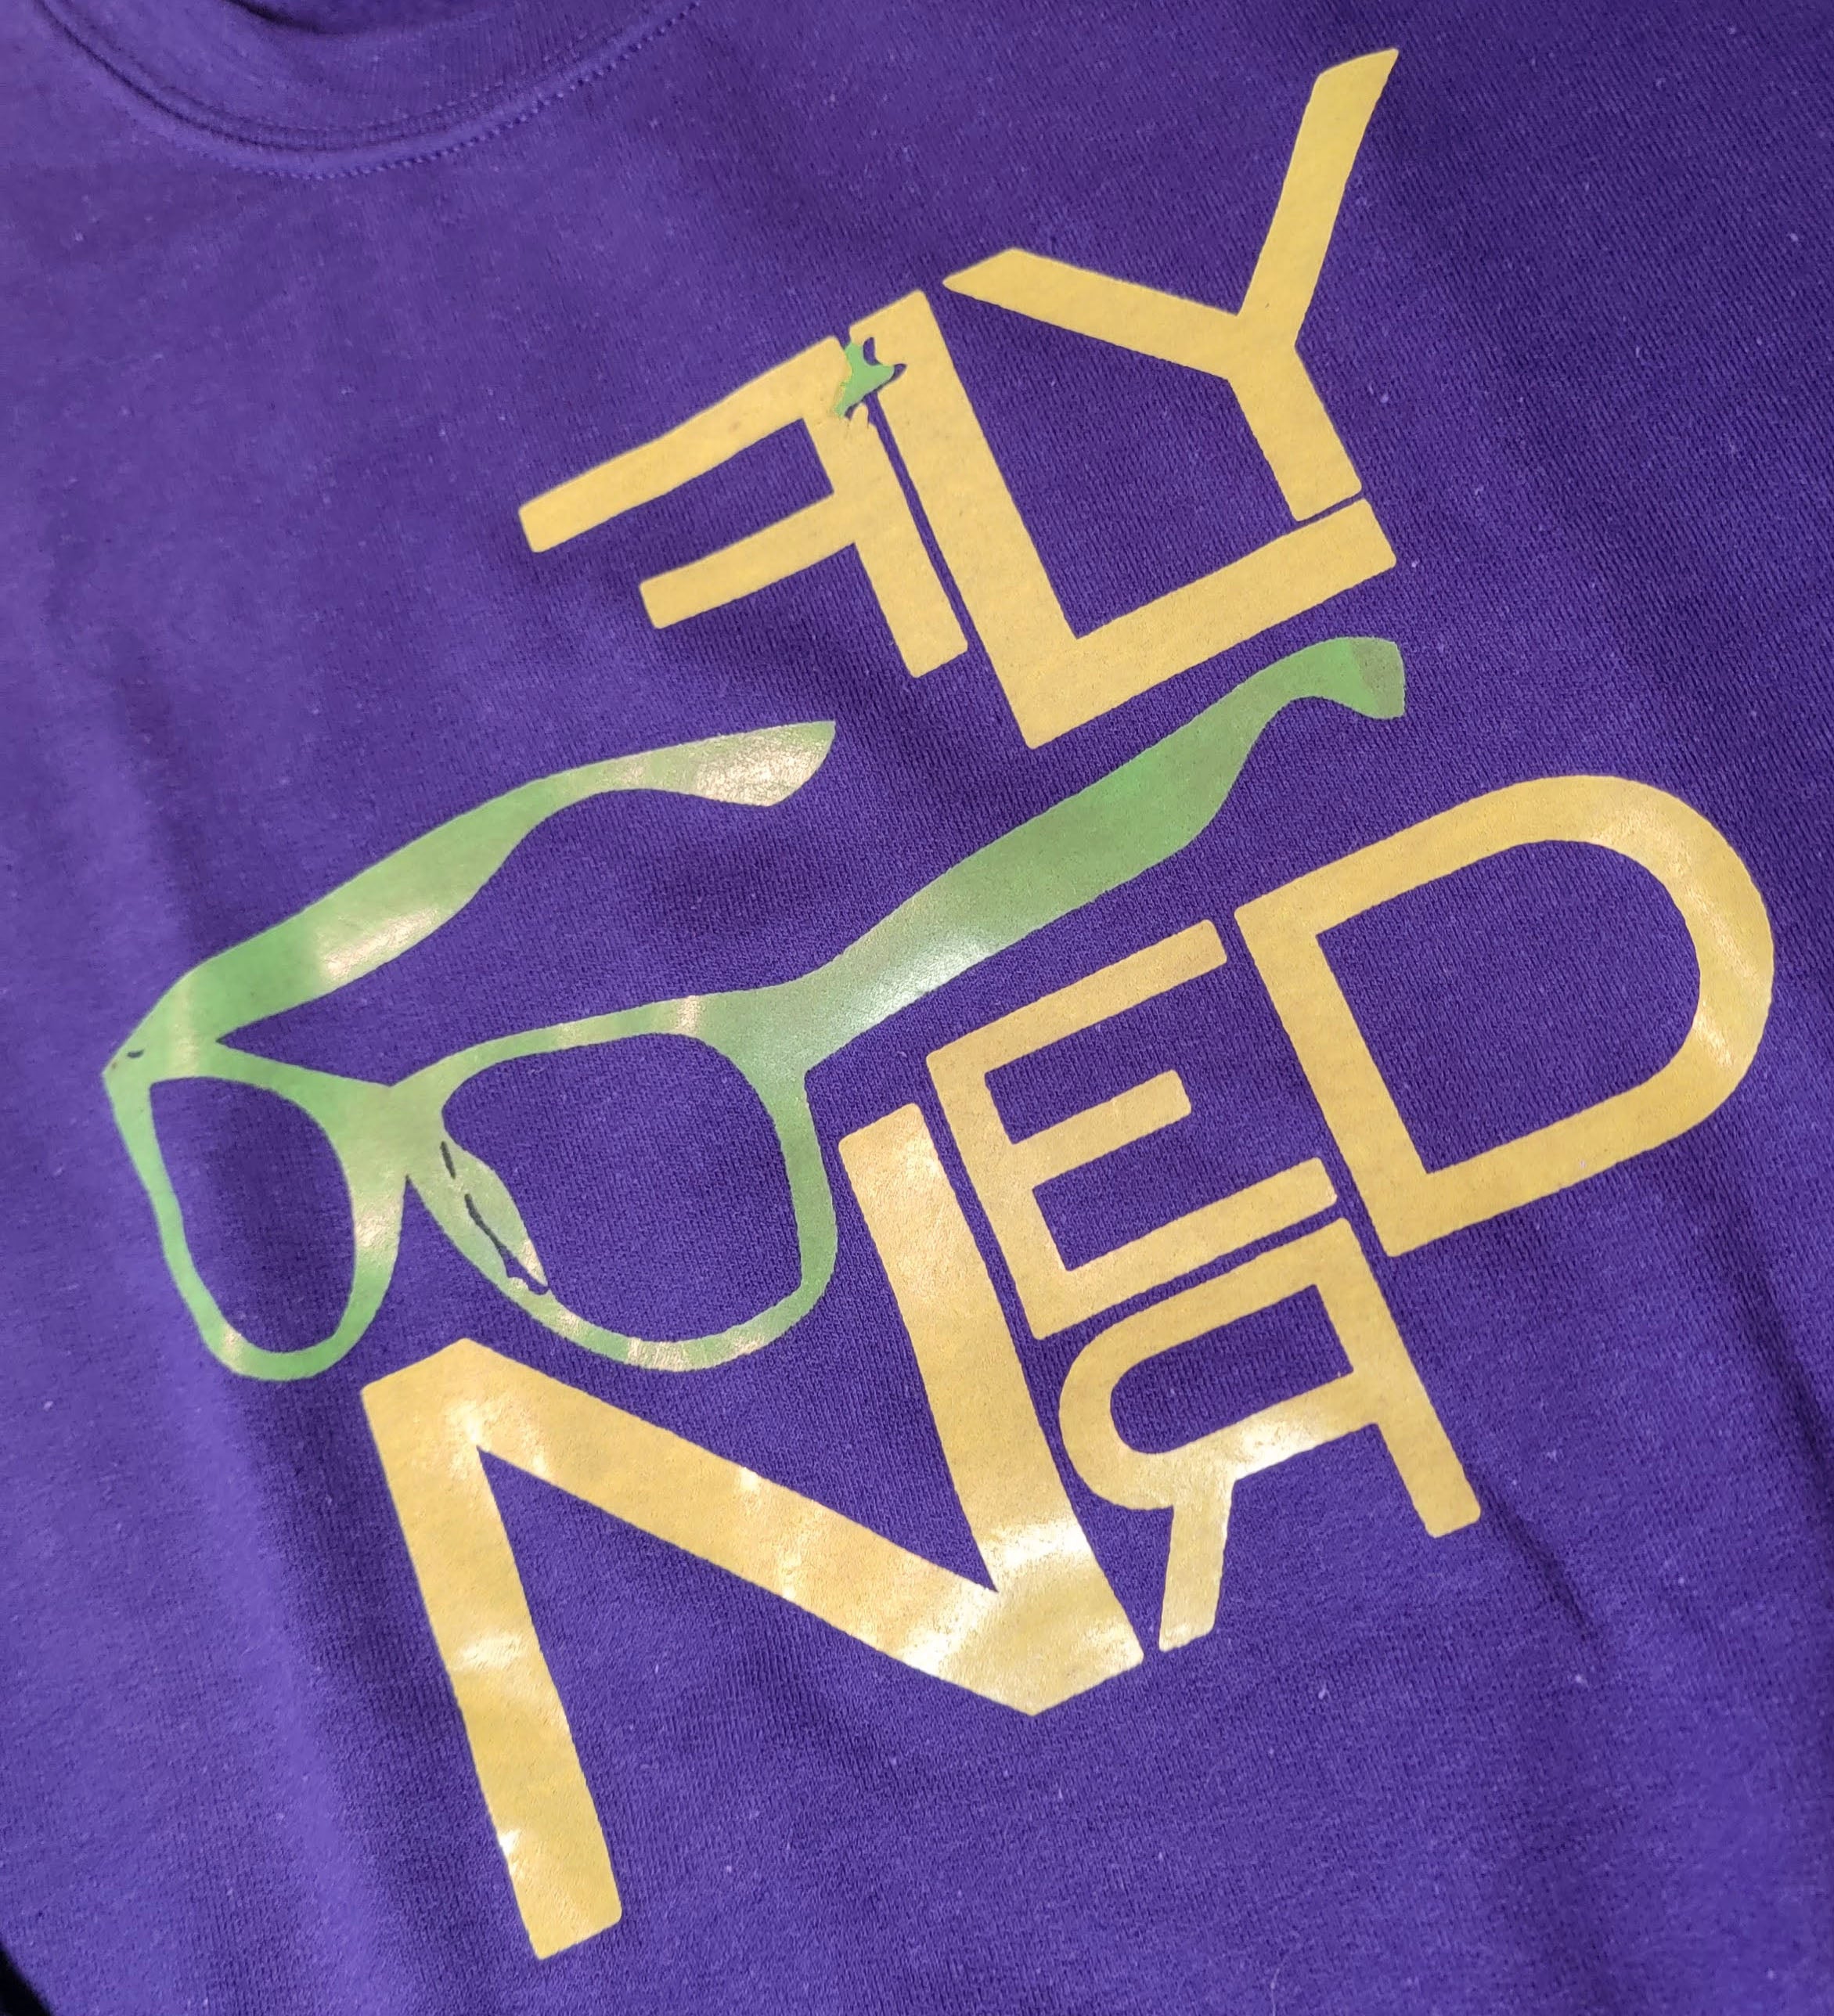 Fly Nerd Classic Sweatshirt